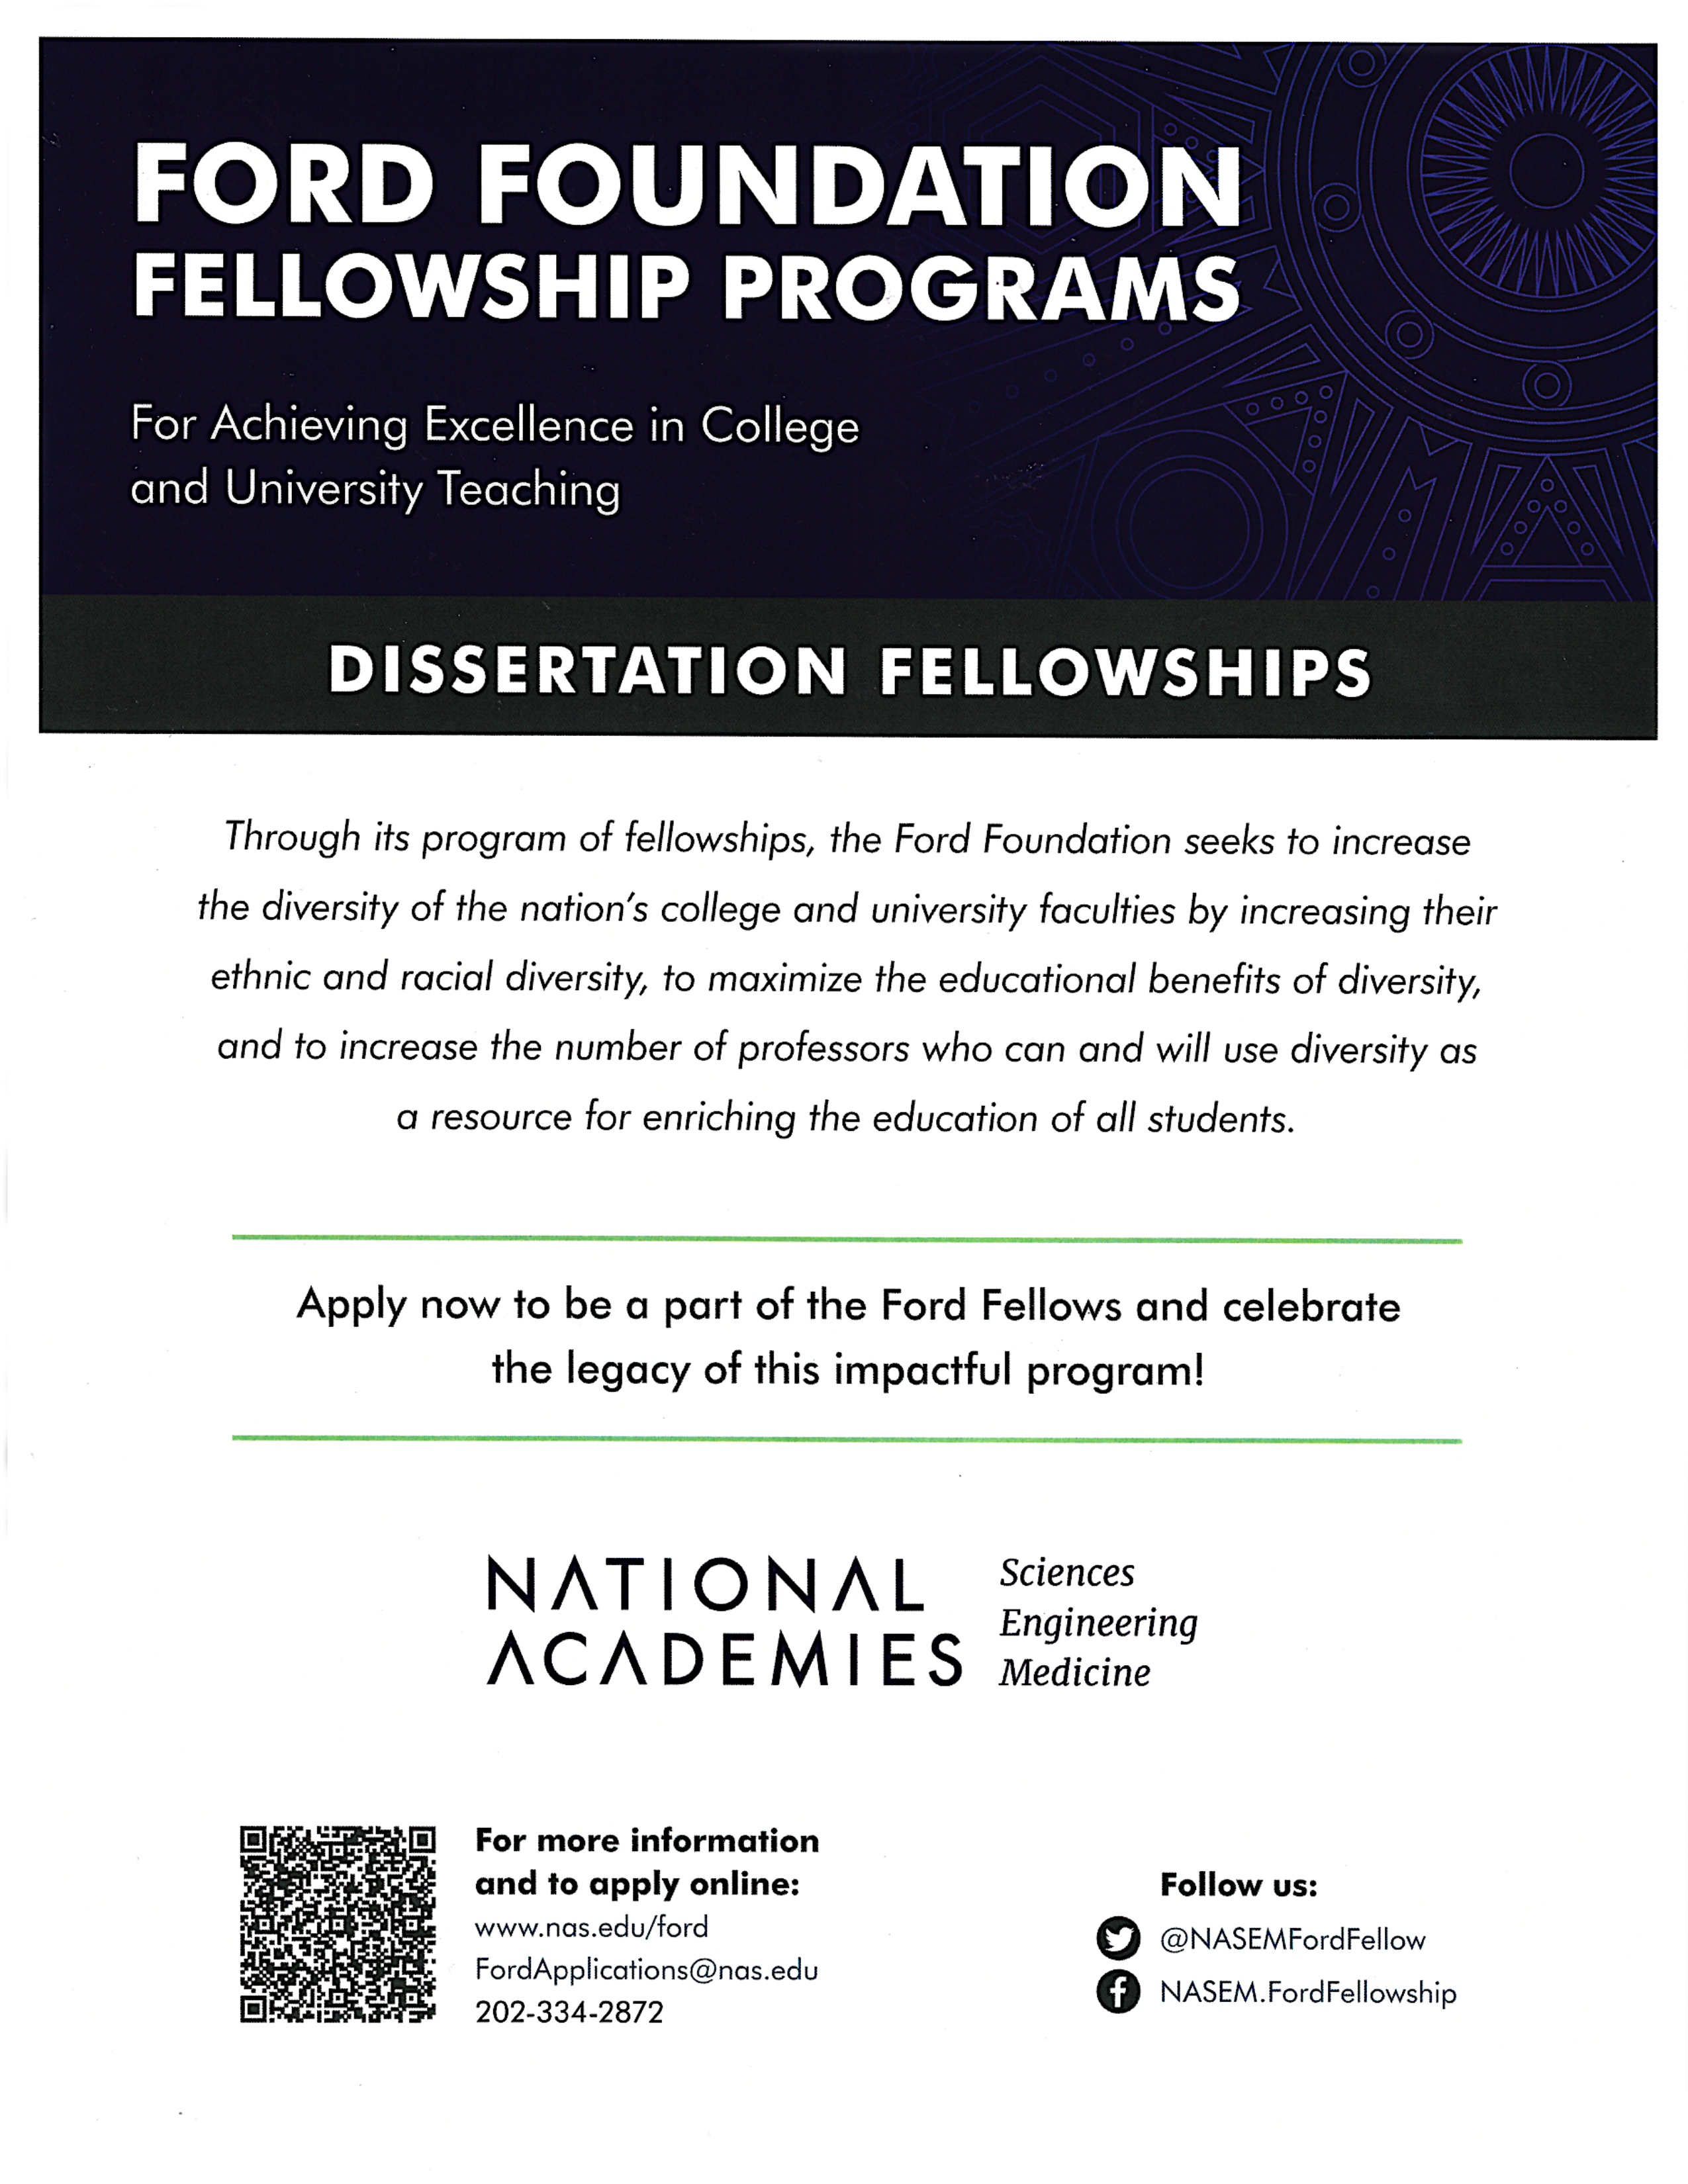 ford_foundation_fellowship_programs_-_dissertation_fellowships_flyer.png